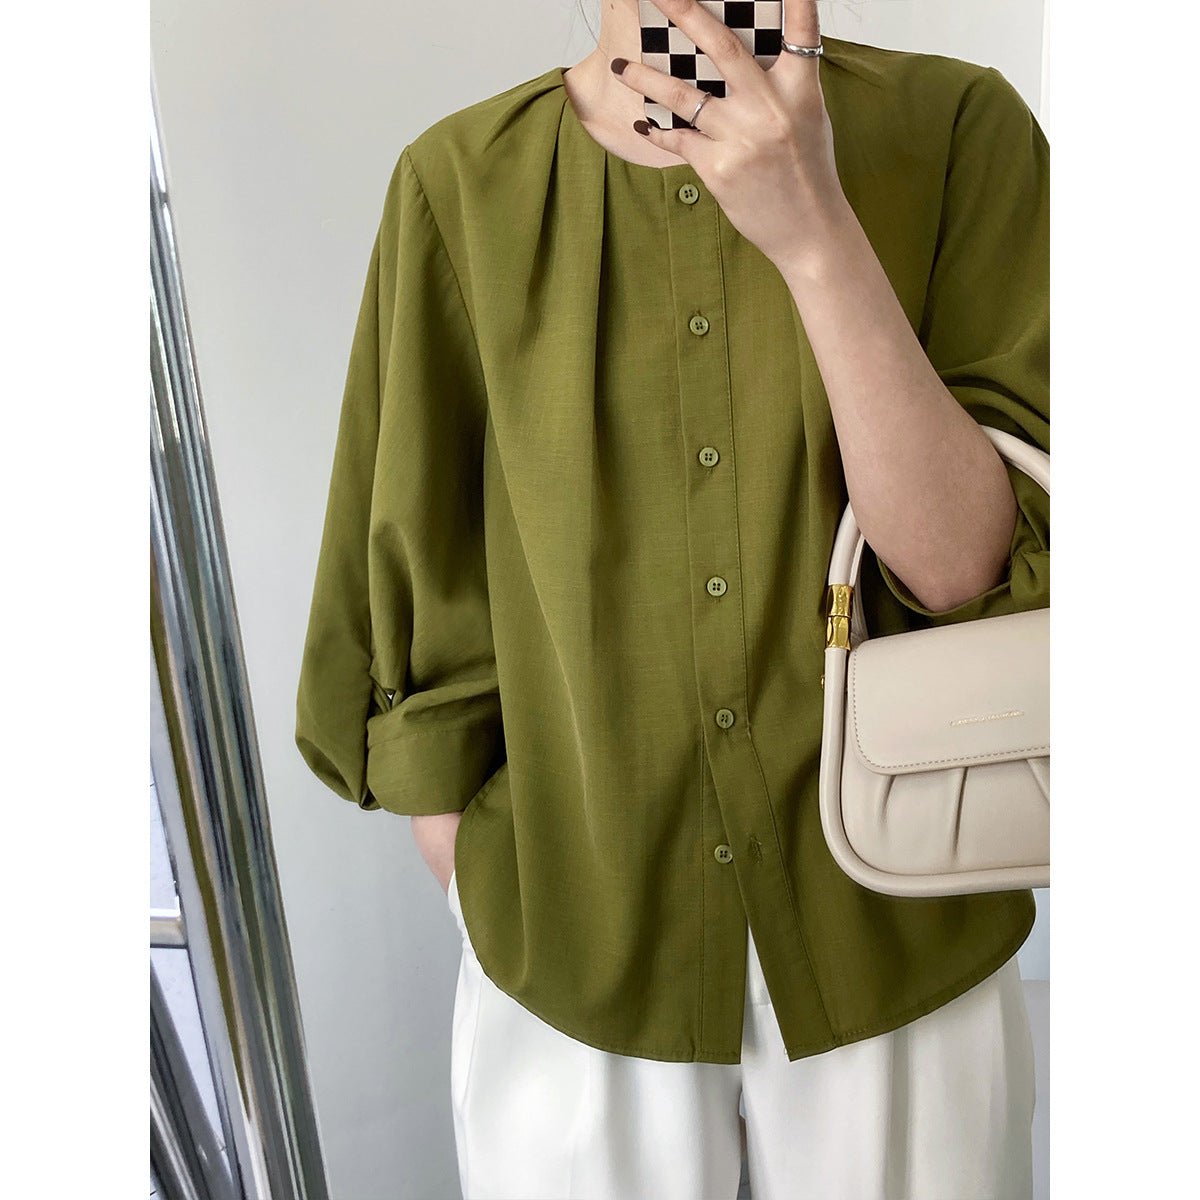 Elegant Linen Women Long Sleeves Blouses Shirts-Shirts & Tops-Green-M-Free Shipping at meselling99